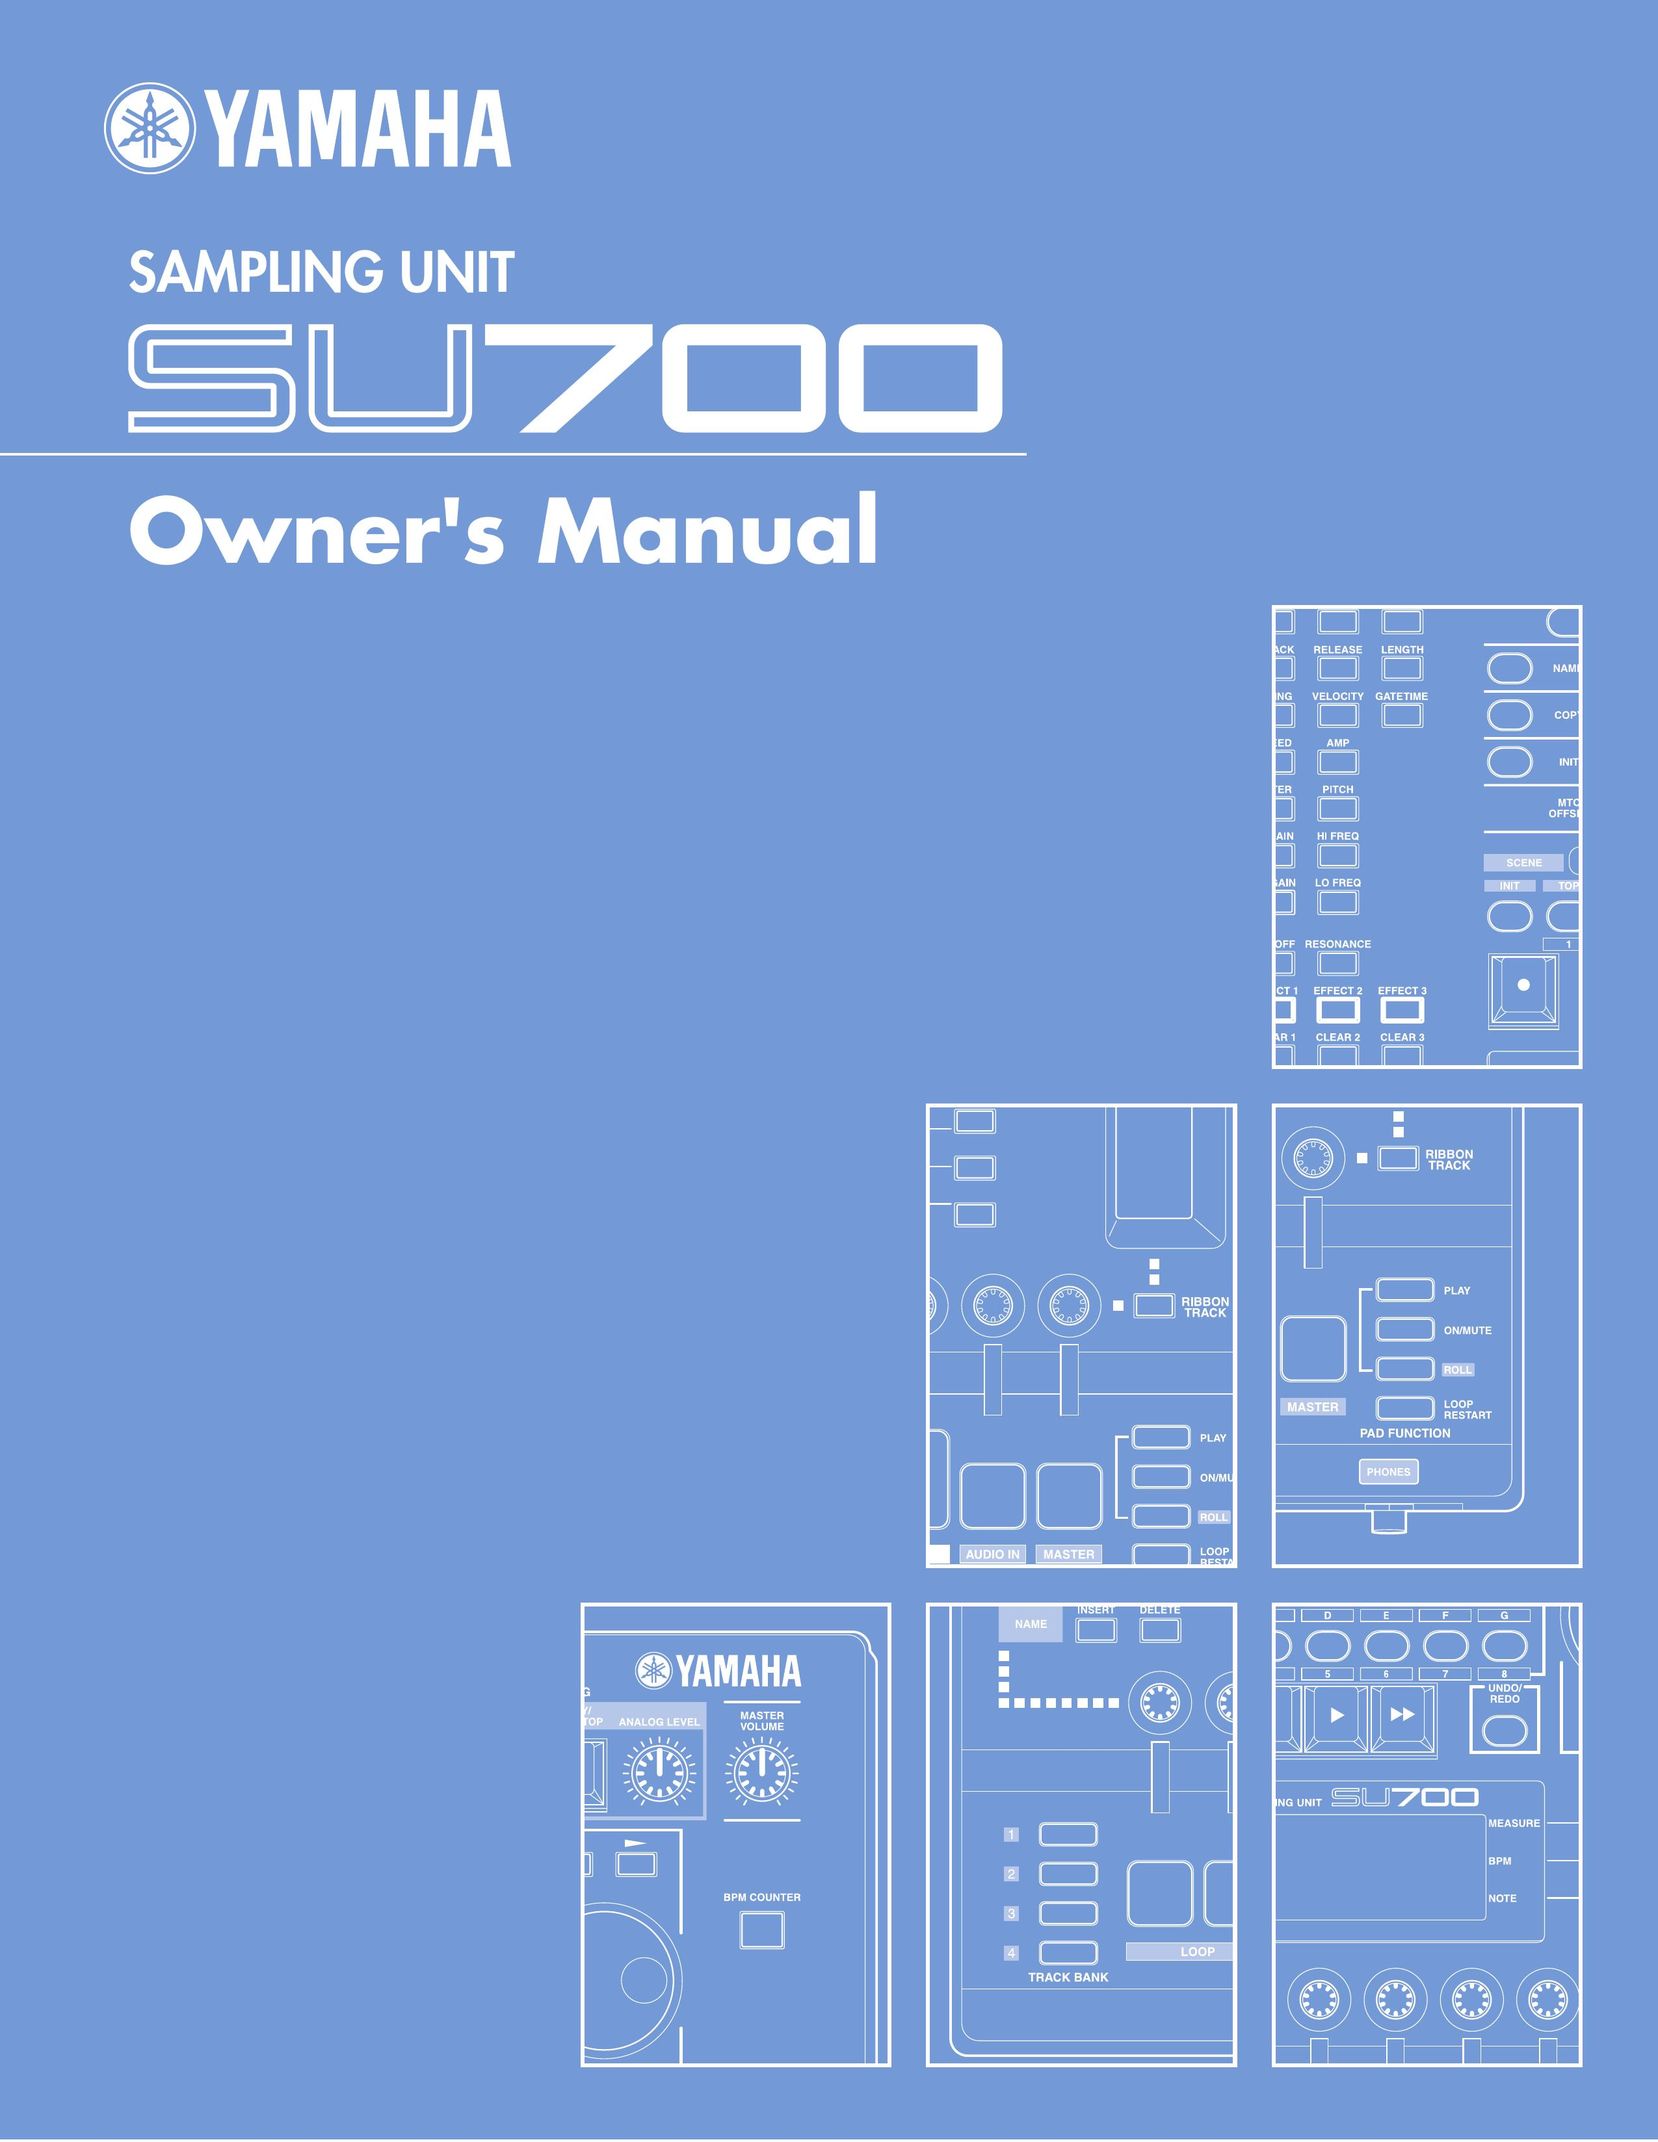 Yamaha SU700 Home Theater Server User Manual